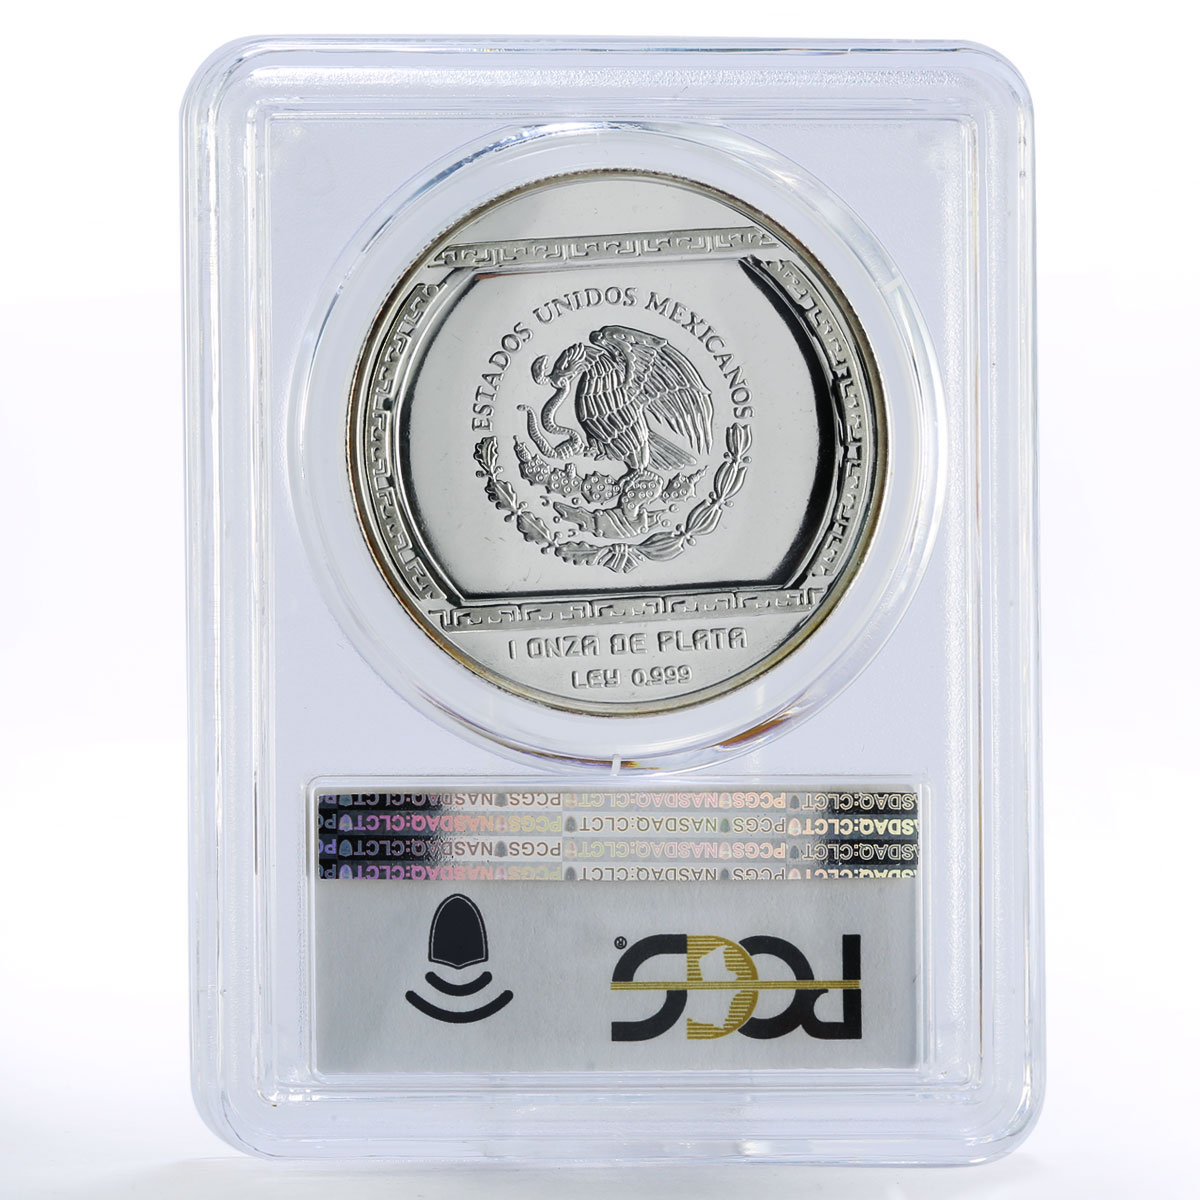 Mexico 5 pesos Precolombina Palma Con Cocodrilo PR69 PCGS silver coin 1993